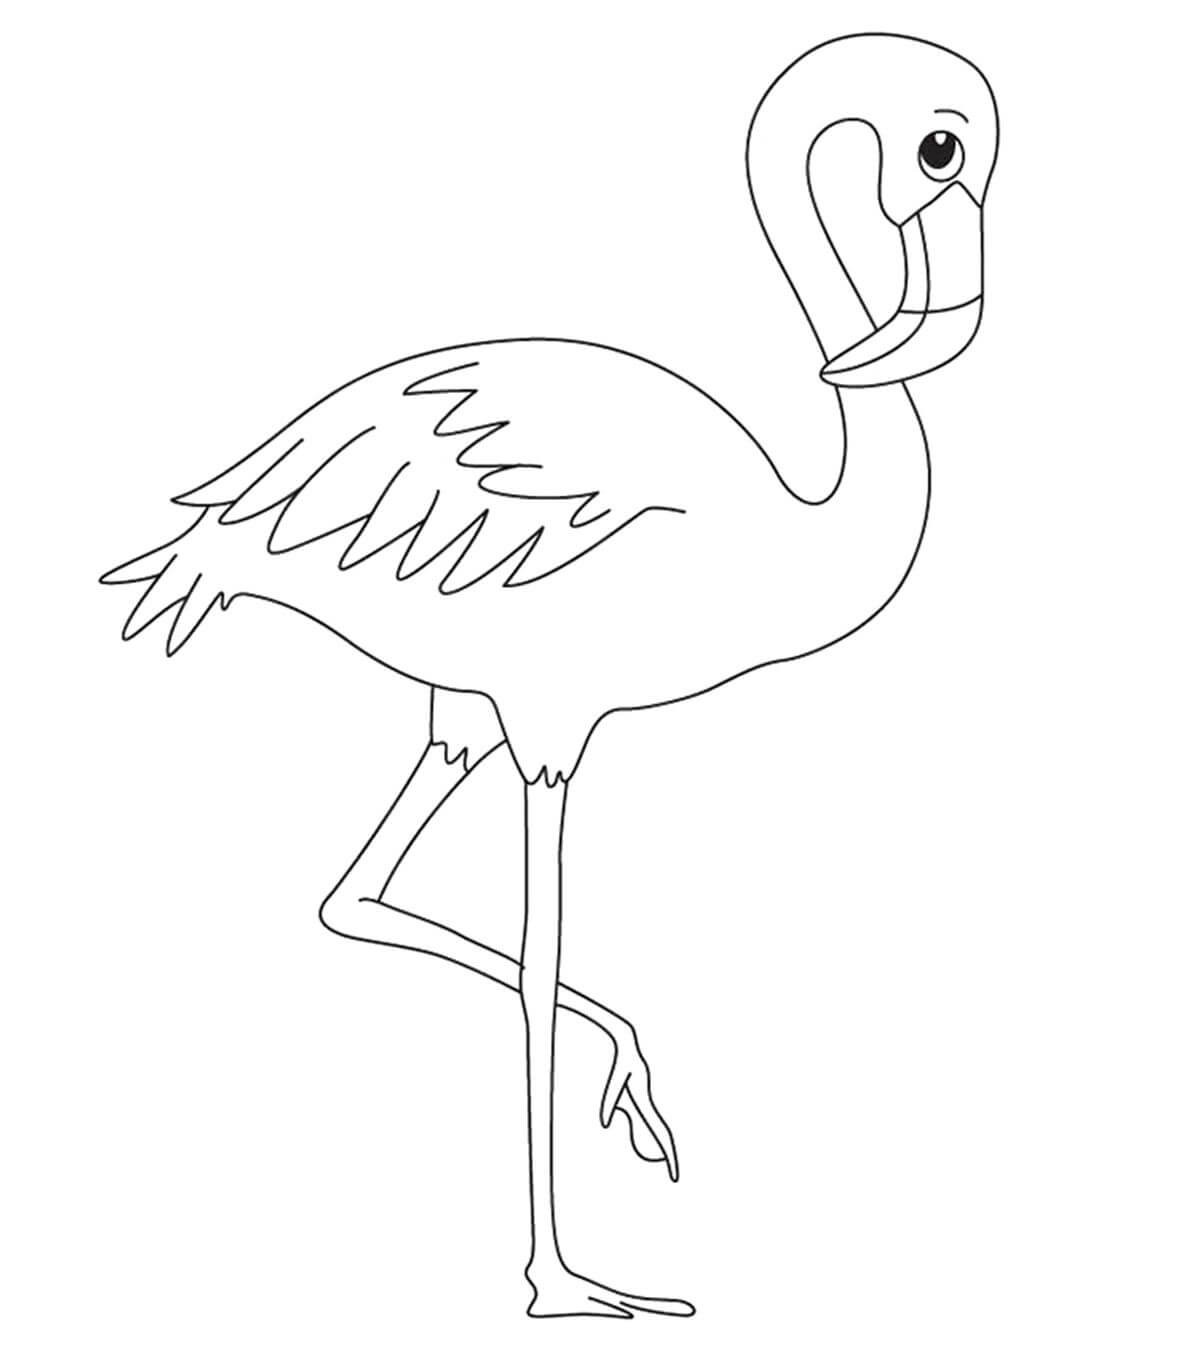 Impressionante Flamingo para colorir